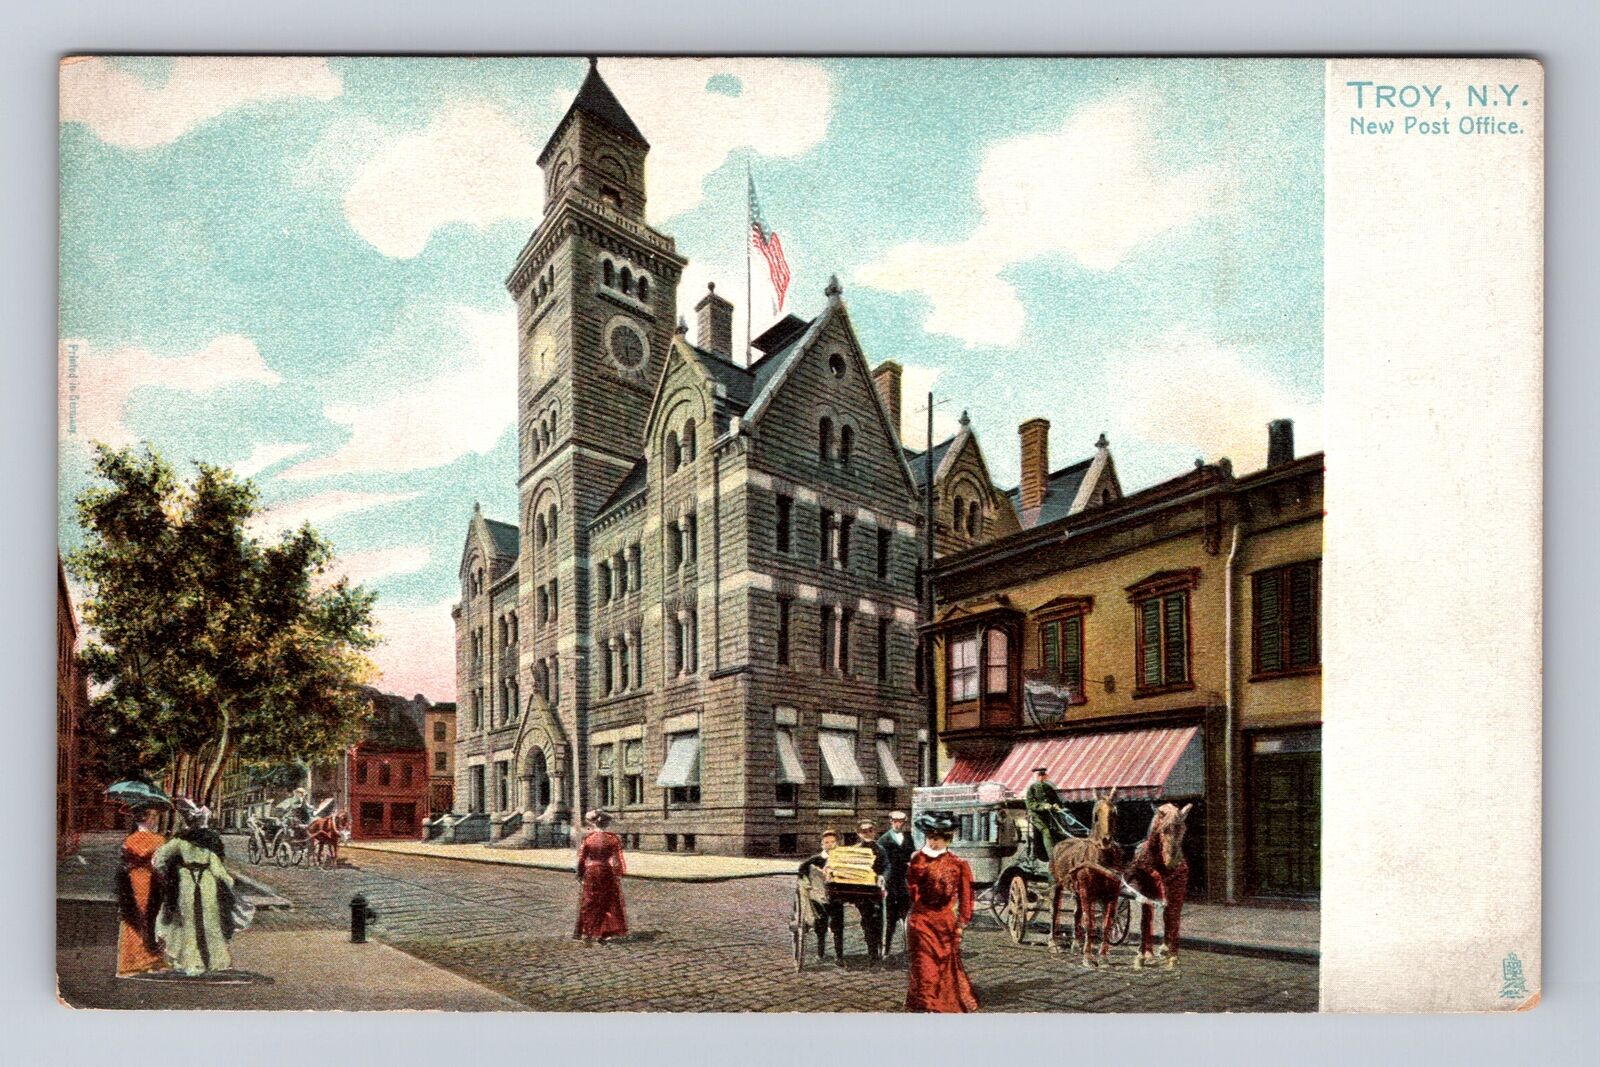 Troy NY-New York, New Post Office, Antique, Vintage Souvenir Postcard